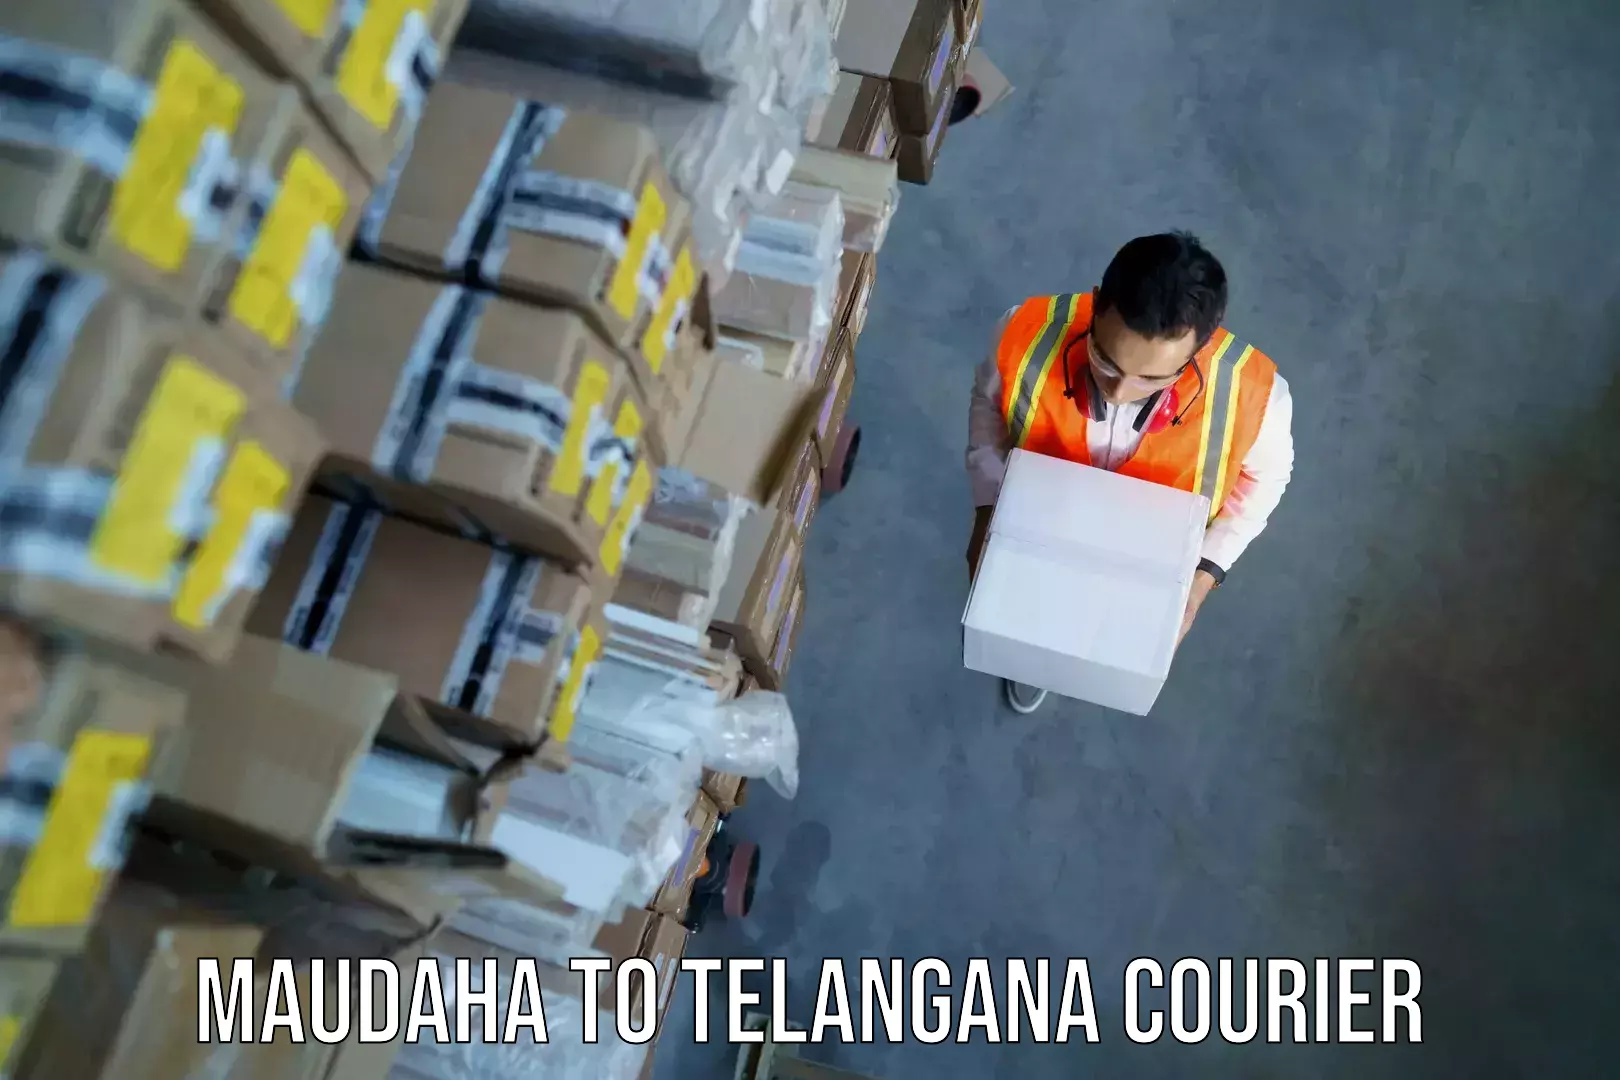 Baggage transport network Maudaha to Telangana